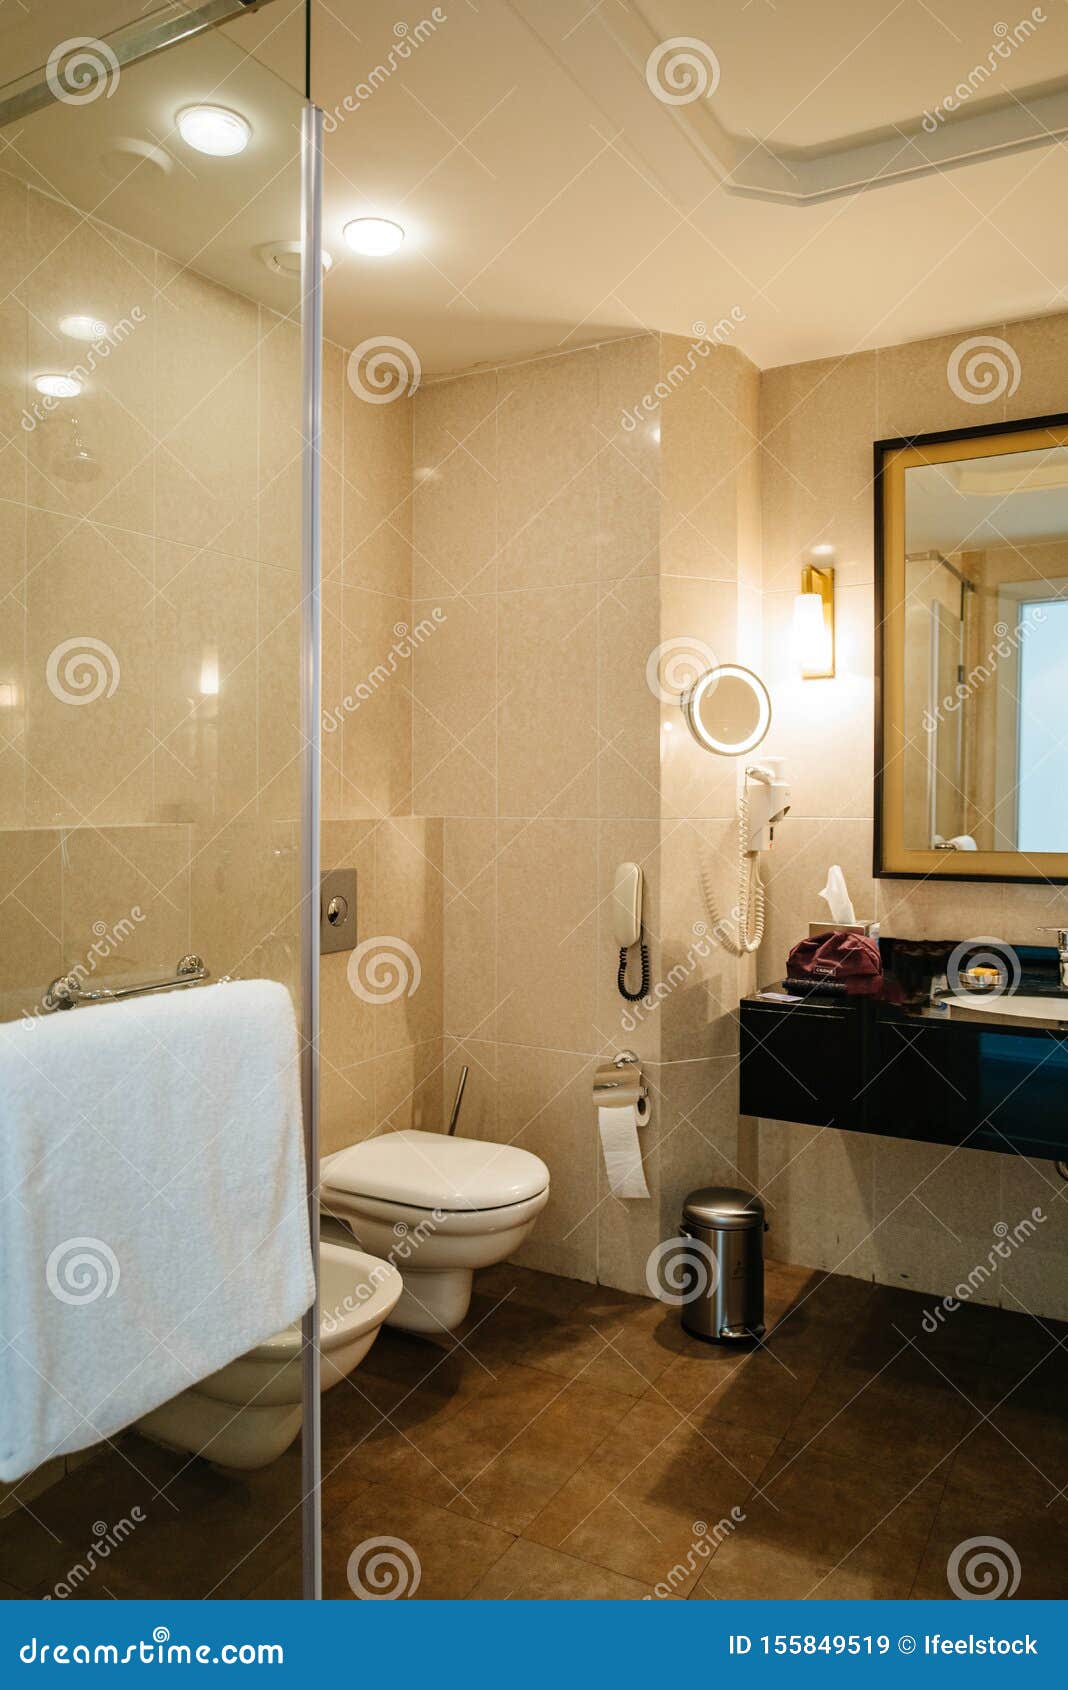 Luxury Five Star Hotel Room Bathroom Stock Image - Image of interior ...